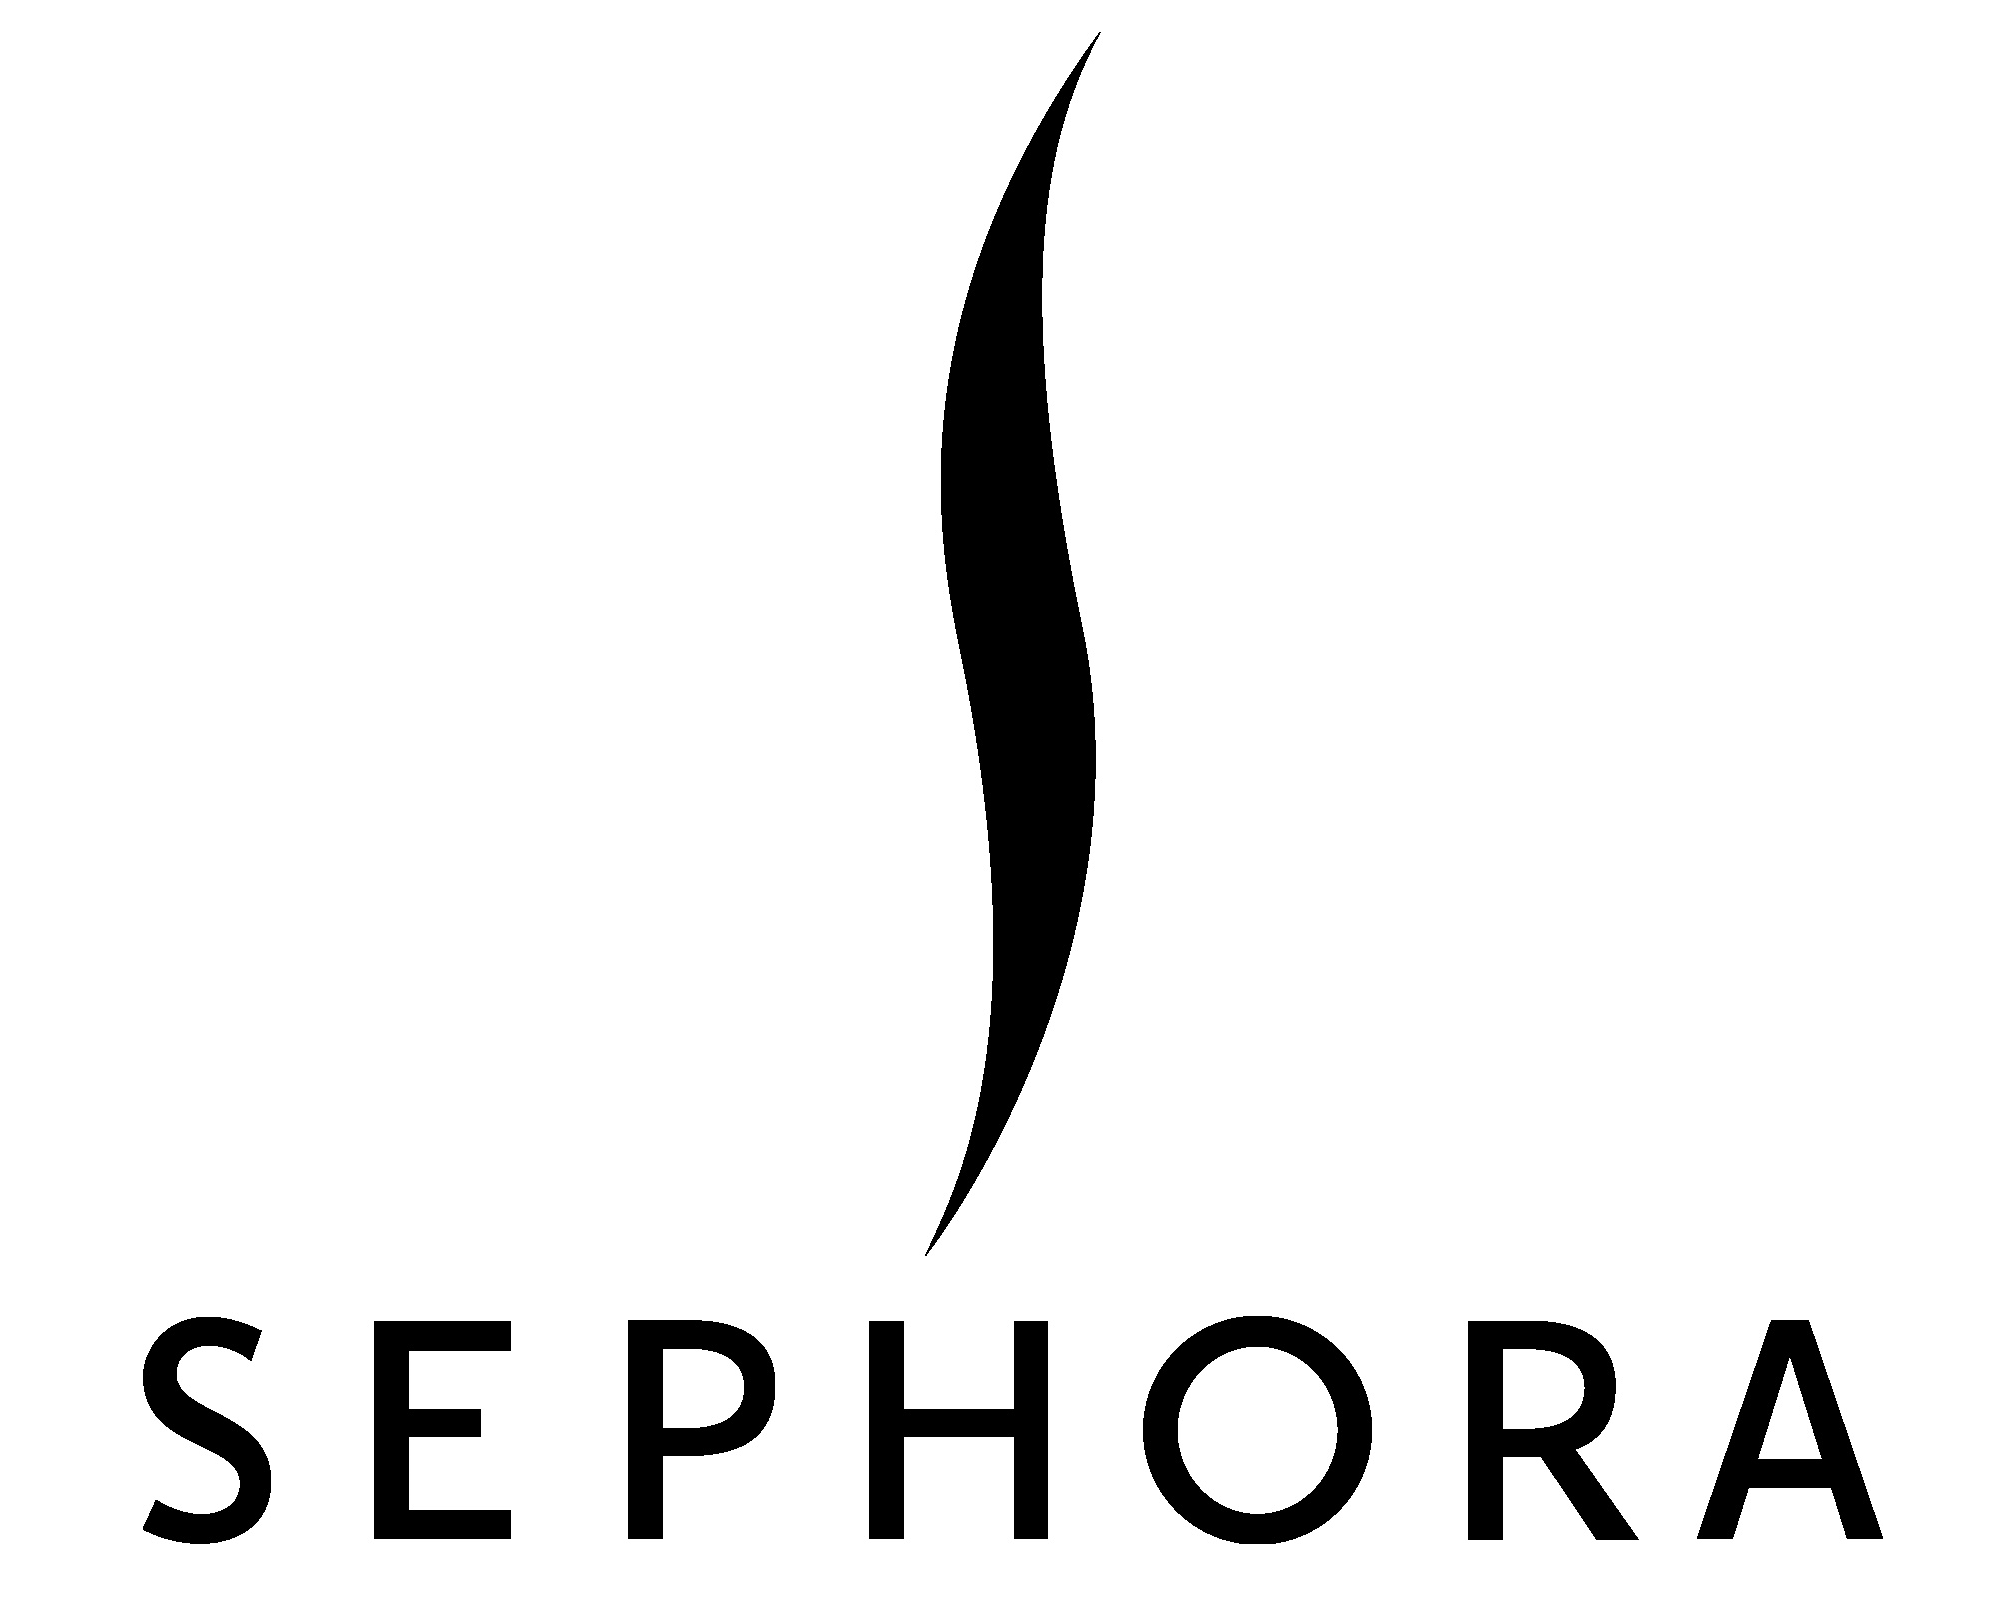 Sephora logo image